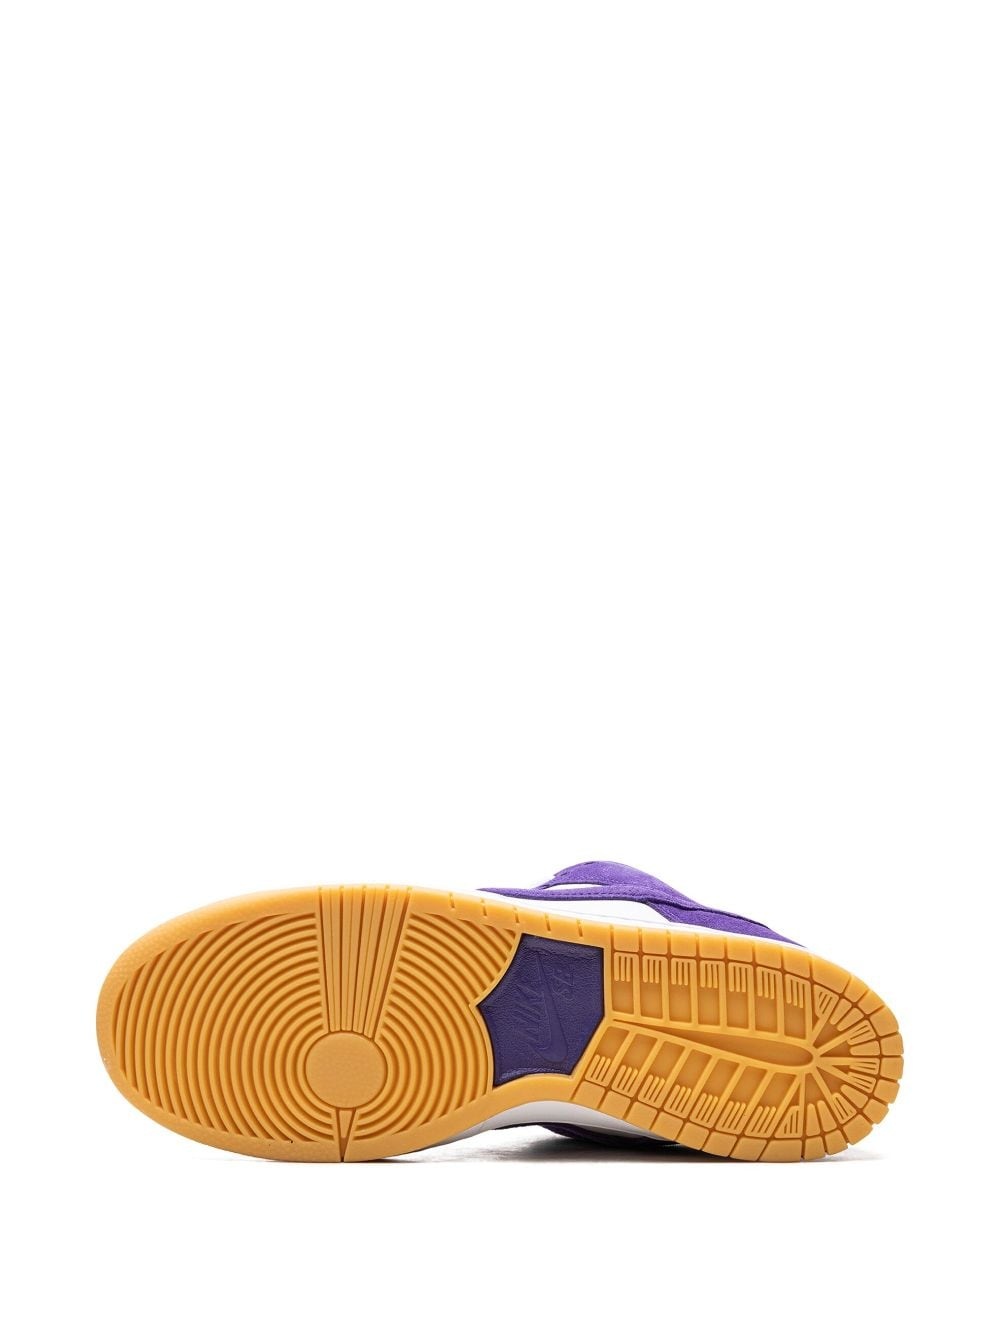 SB Dunk Low Pro ISO "Court Purple" sneakers - 5